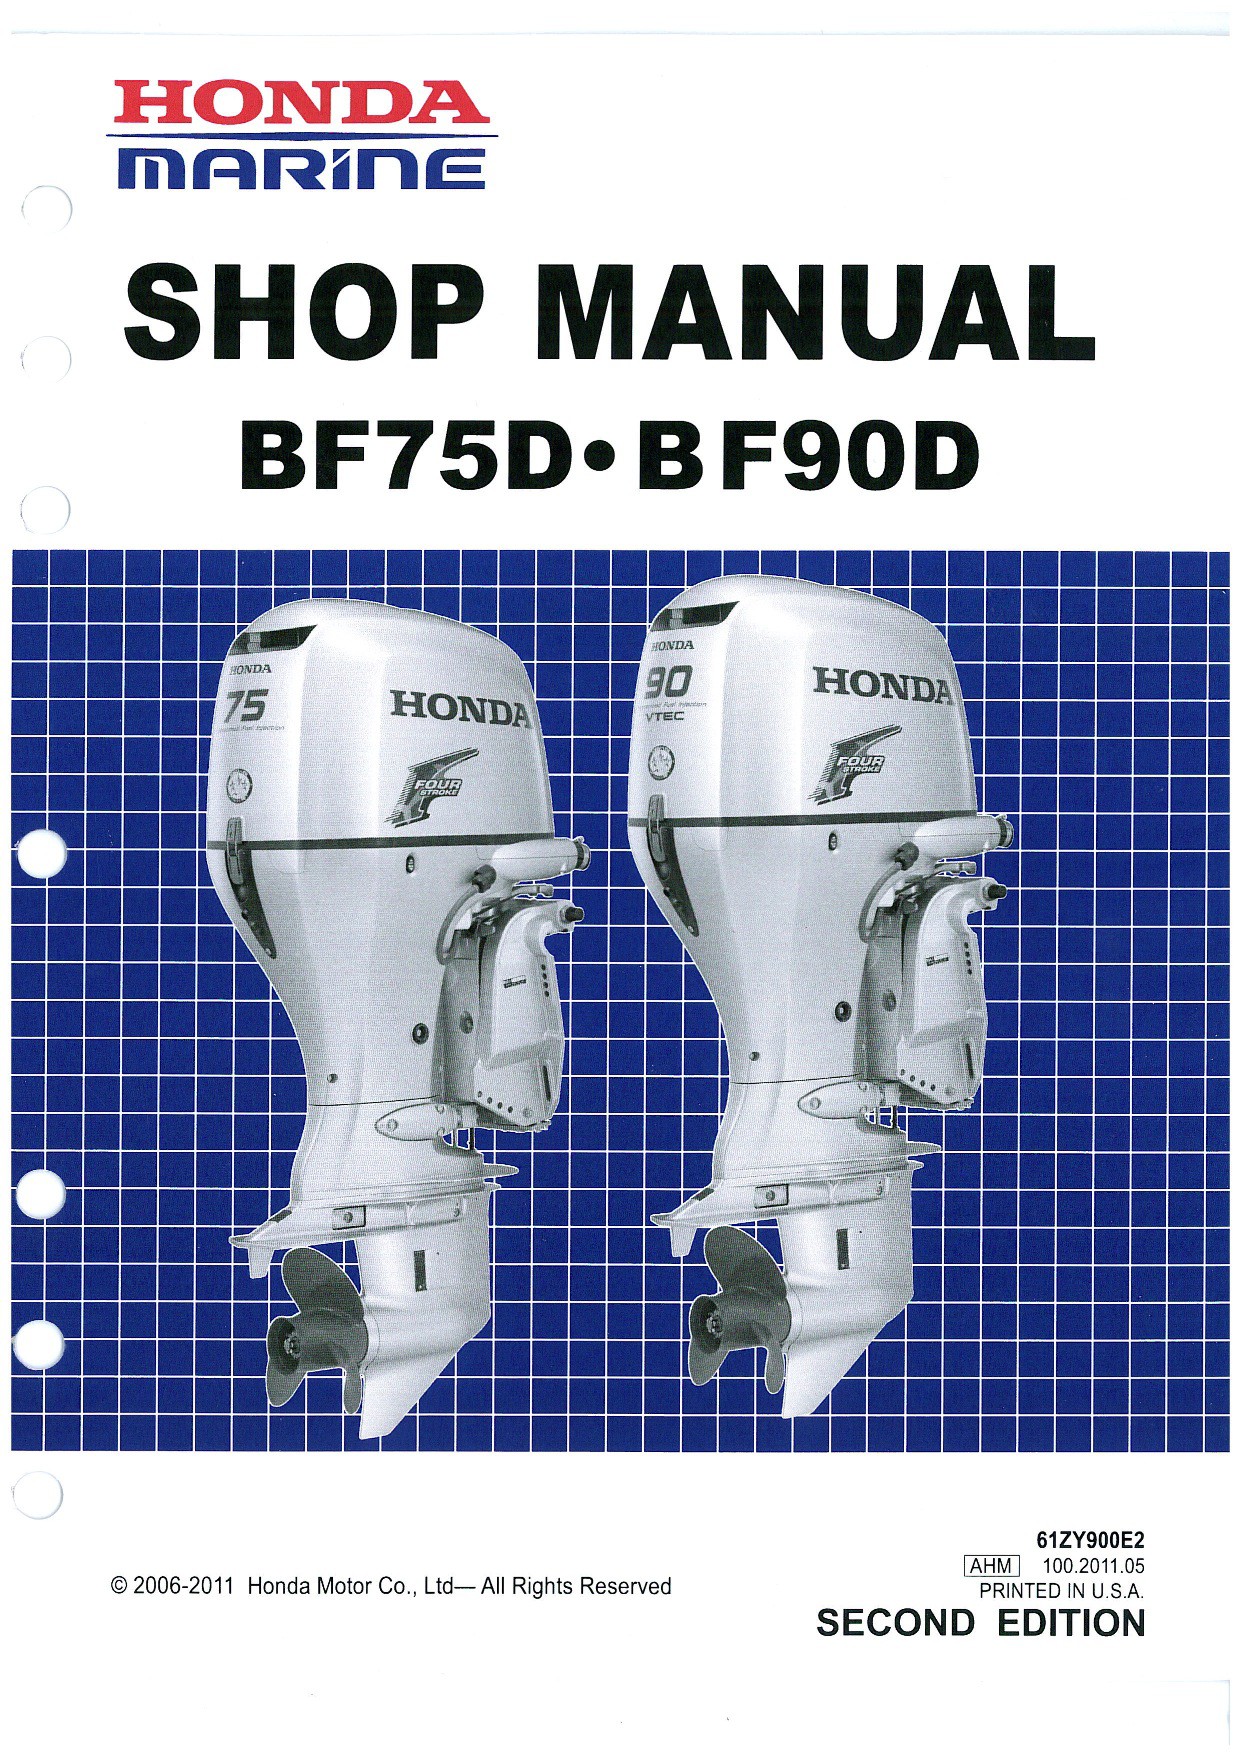 Service manual for honda outboard motor